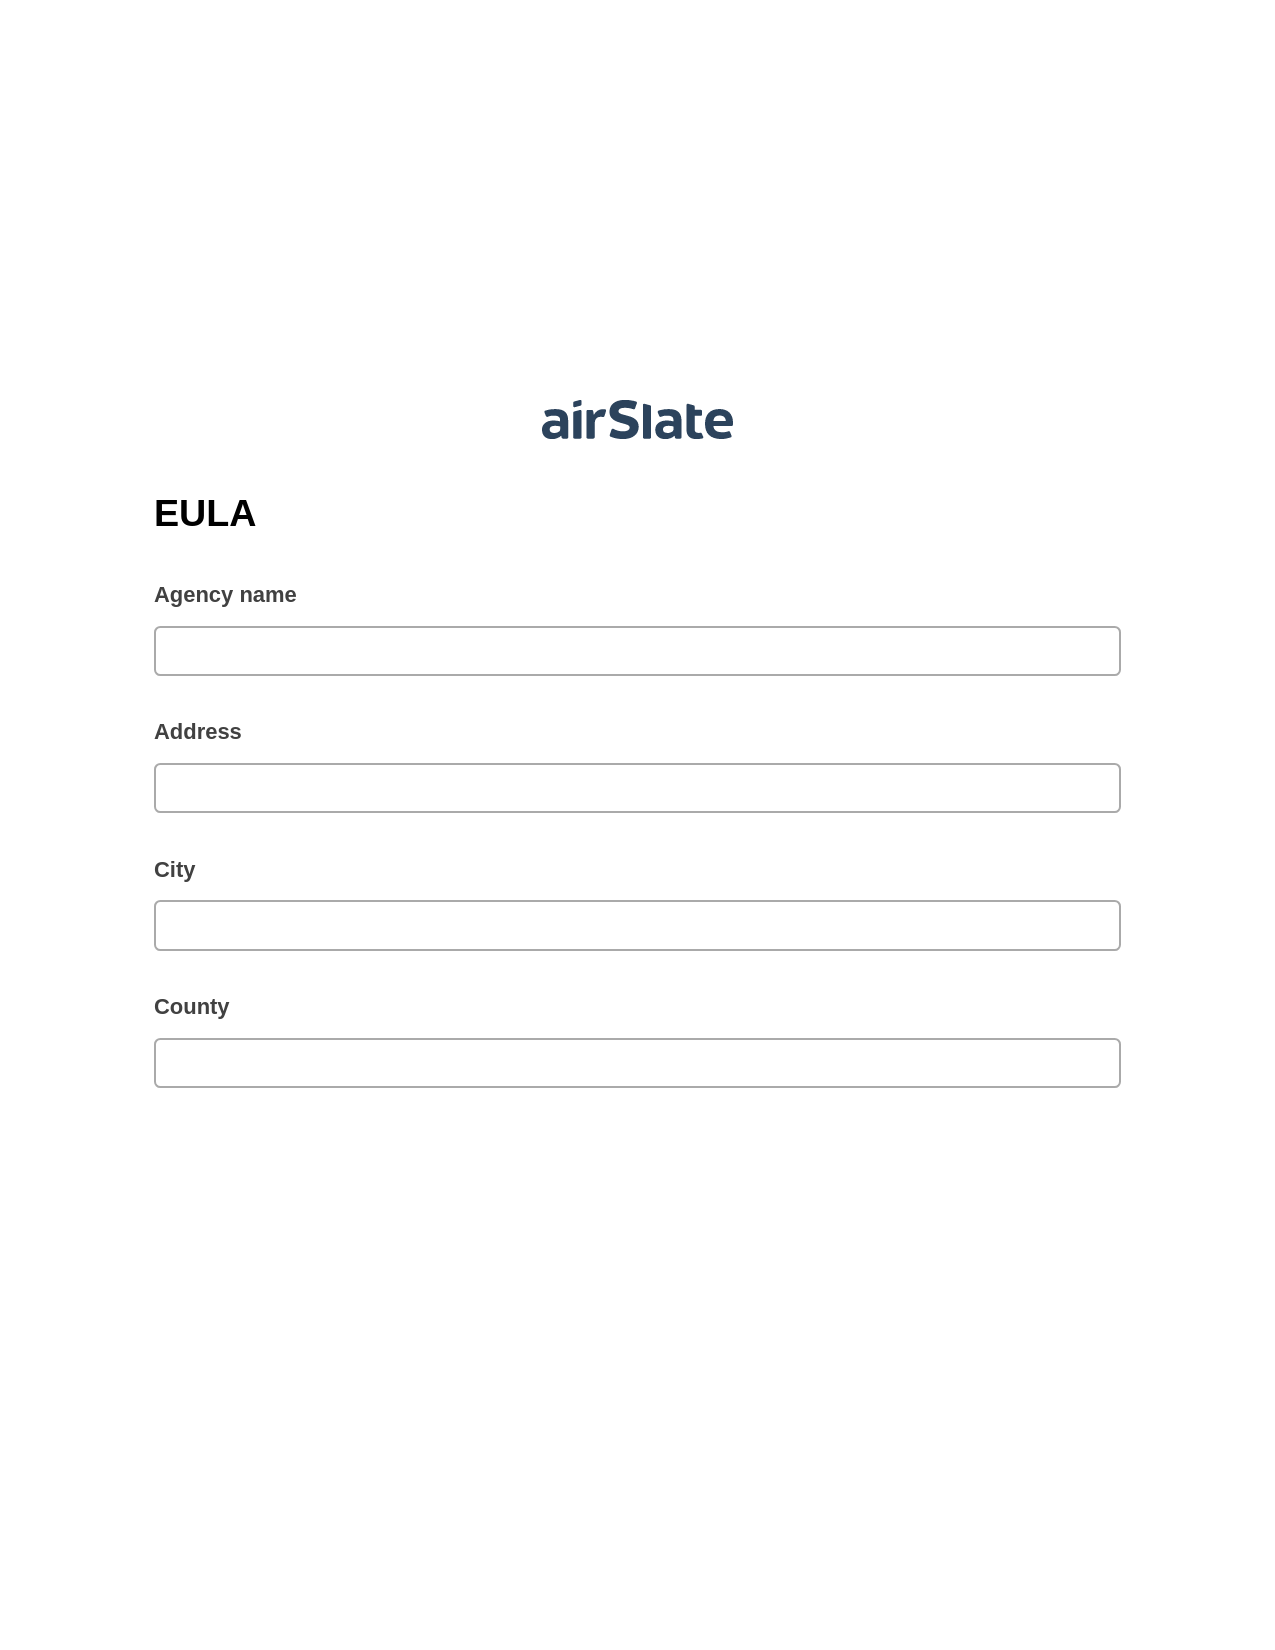 EULA Pre-fill from CSV File Dropdown Options Bot, 1Create Slate every Google Sheet Update Bot, Slack Two-Way Binding Bot